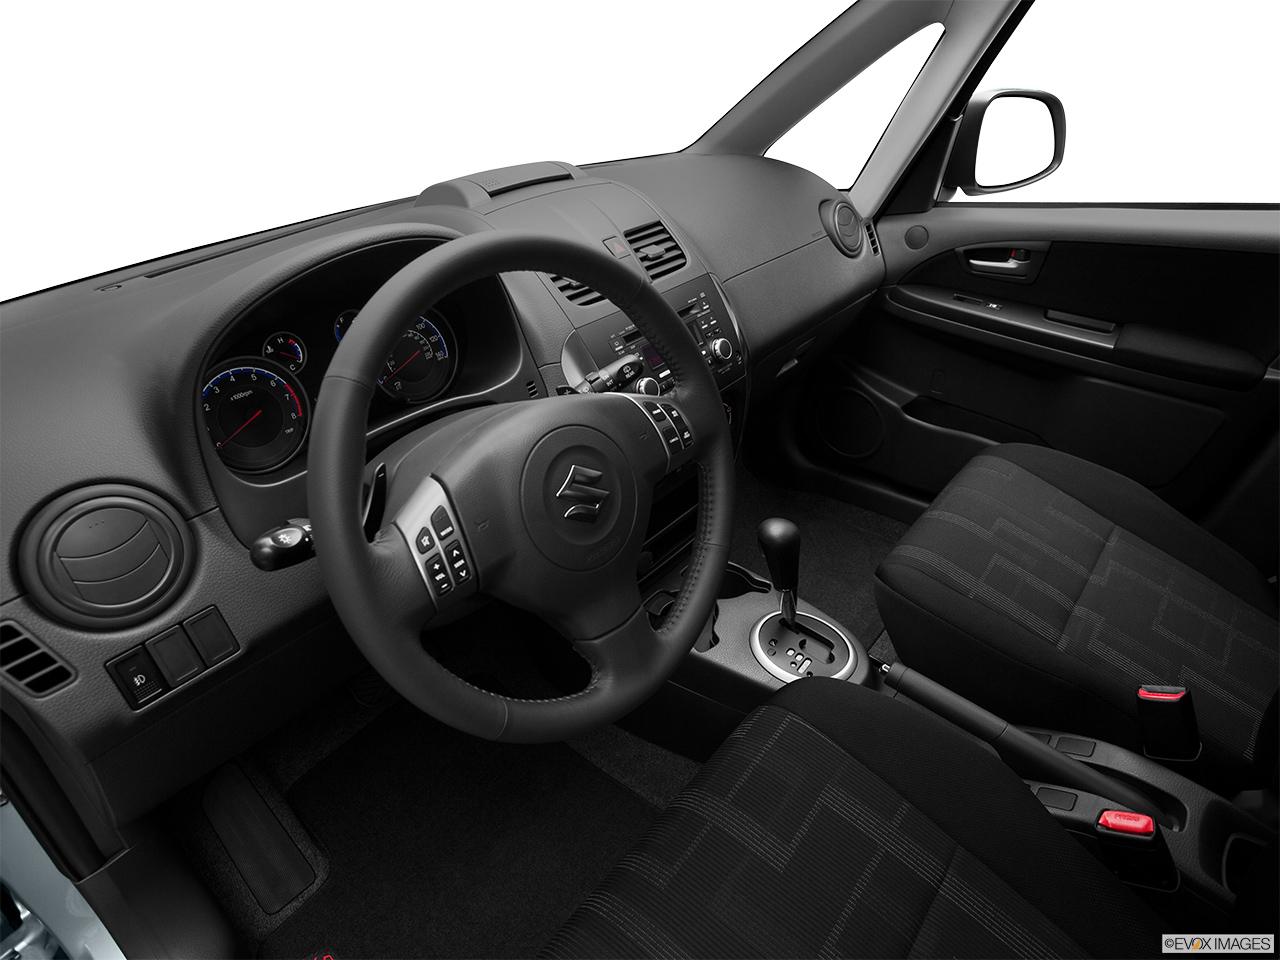 2011 Suzuki SX4 Sportback Technology Interior Hero (driver's side). 